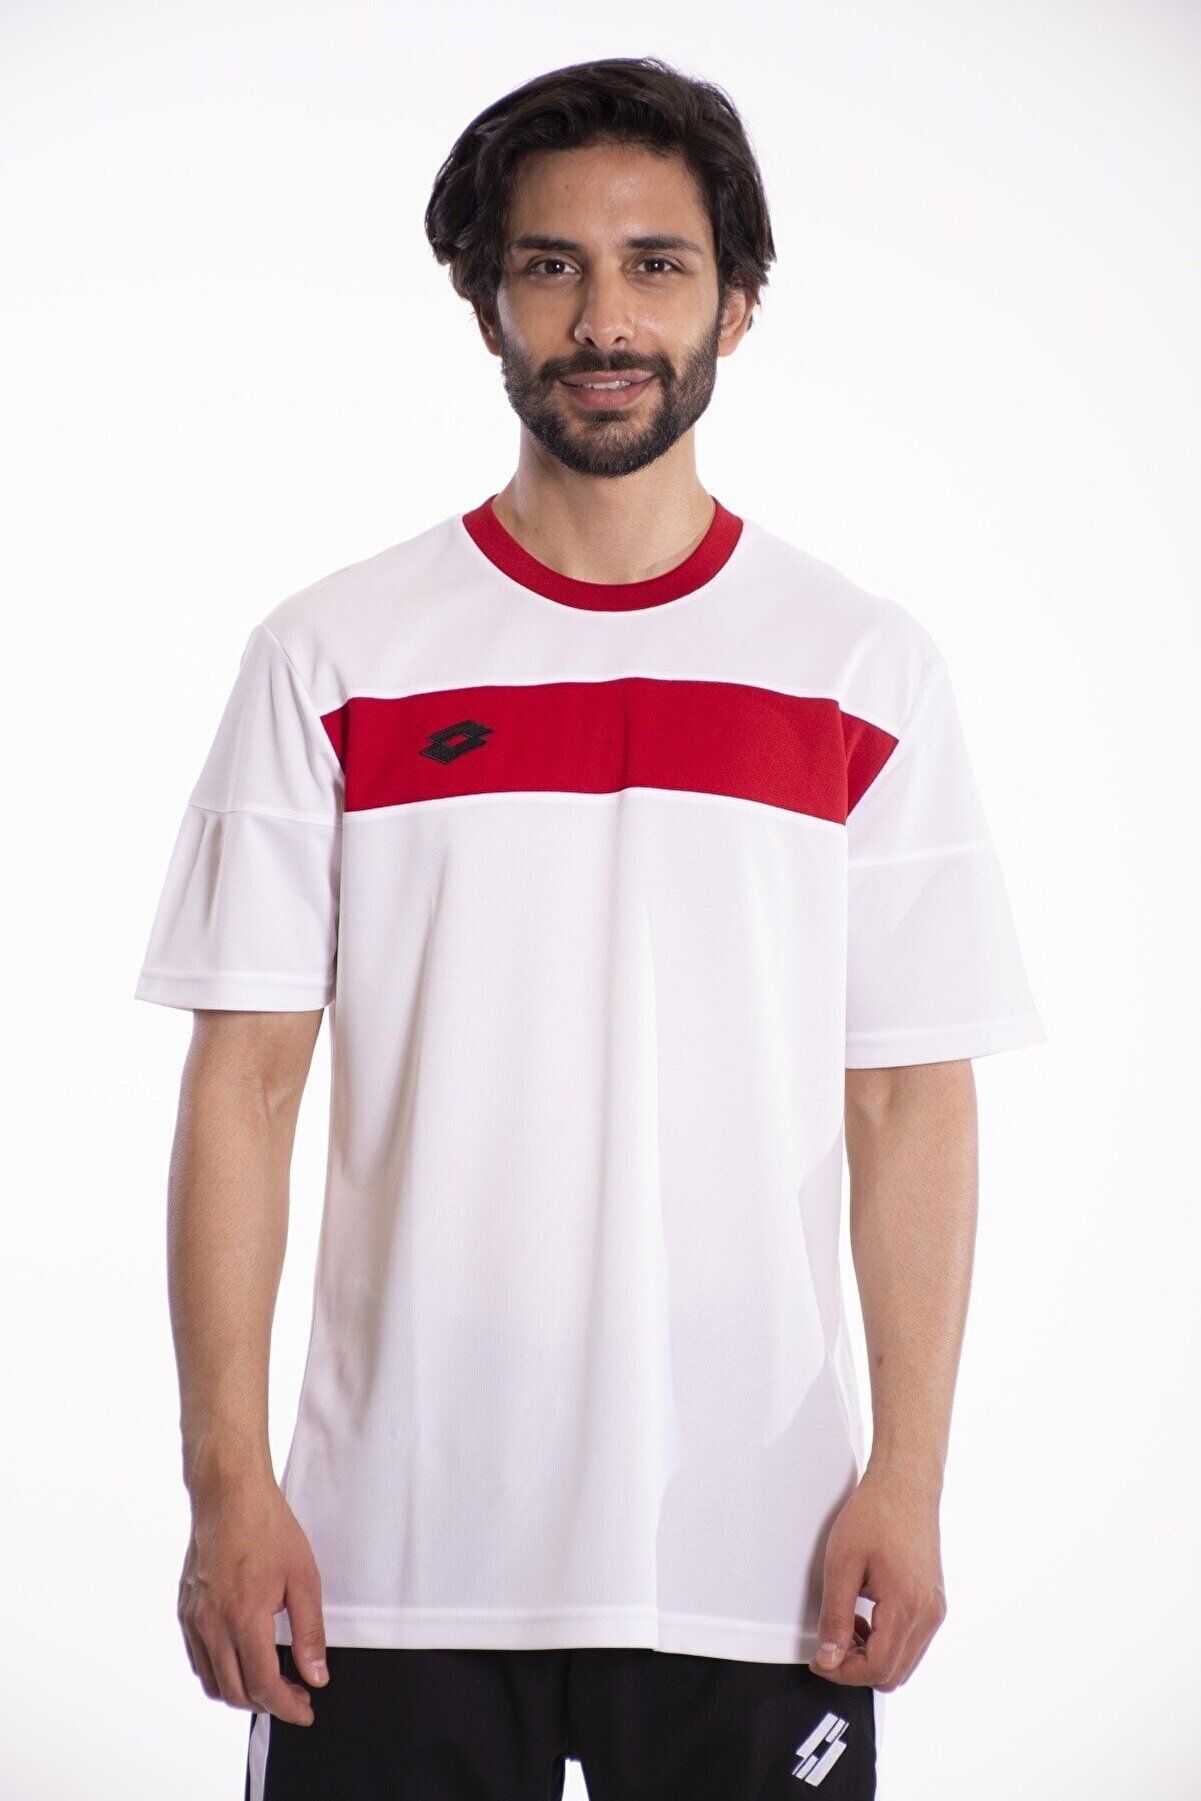 Lotto T-shirt Erkek Beyaz/kırmızı/siyah-lucca Tee Pl